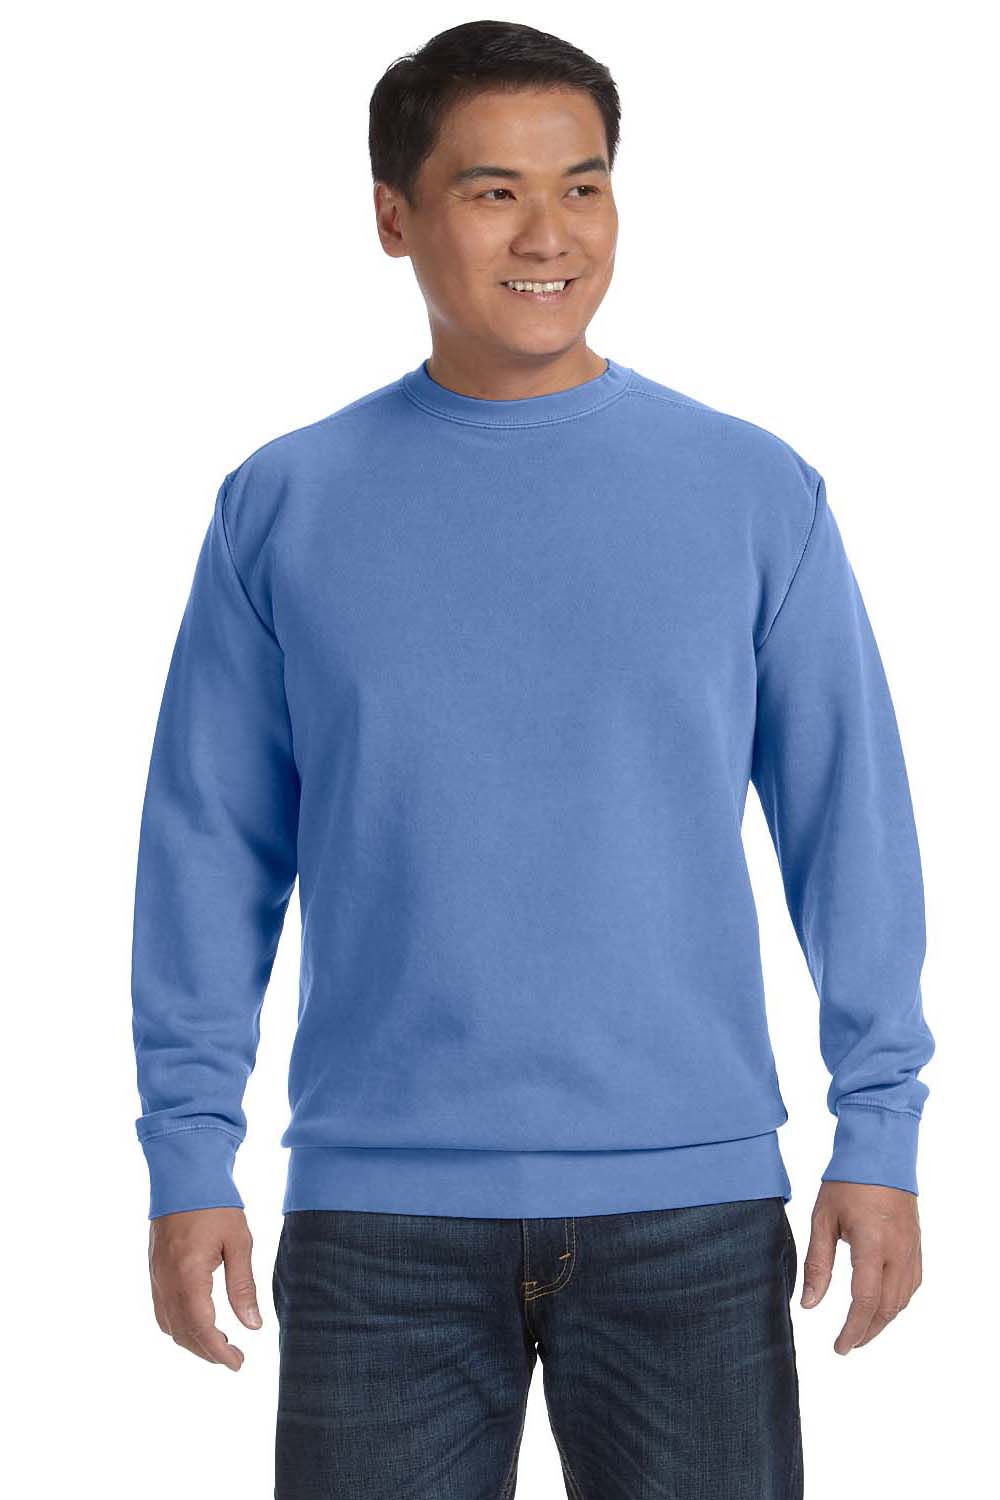 Comfort Colors 1566 Mens Crewneck Sweatshirt Flo Blue Front